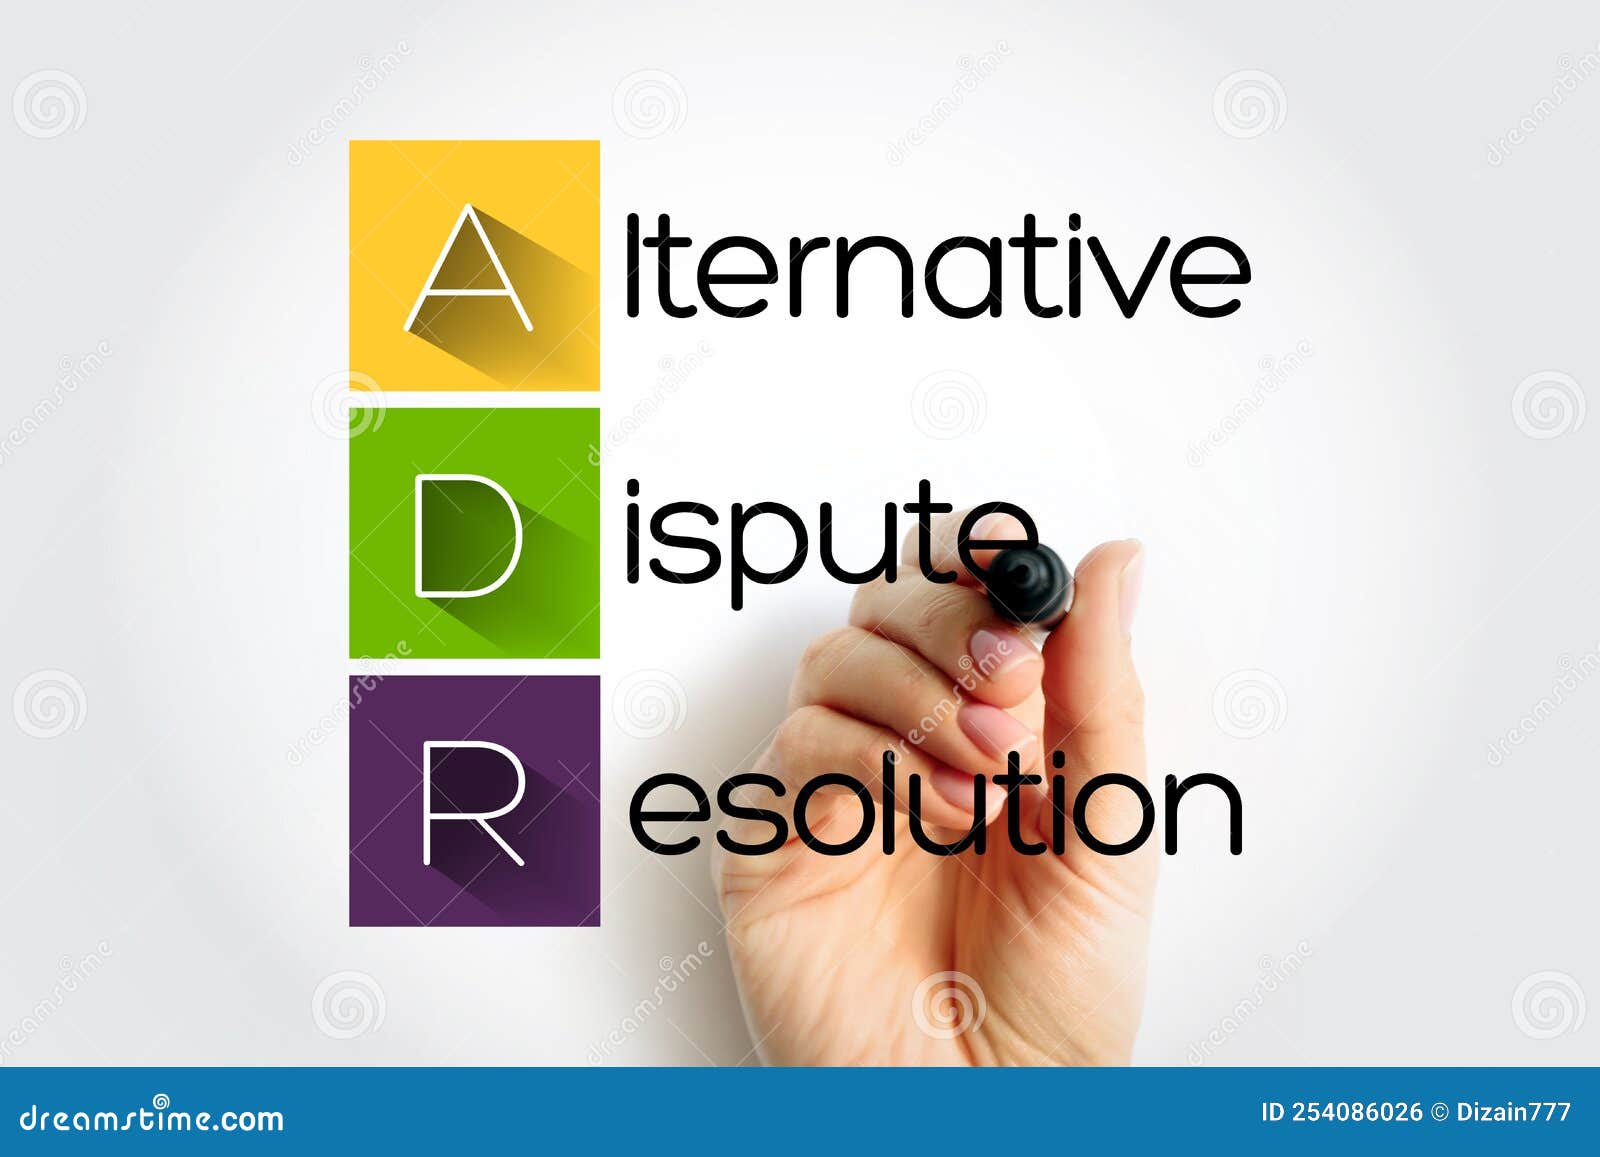 adr - alternative dispute resolution acronym, business concept background